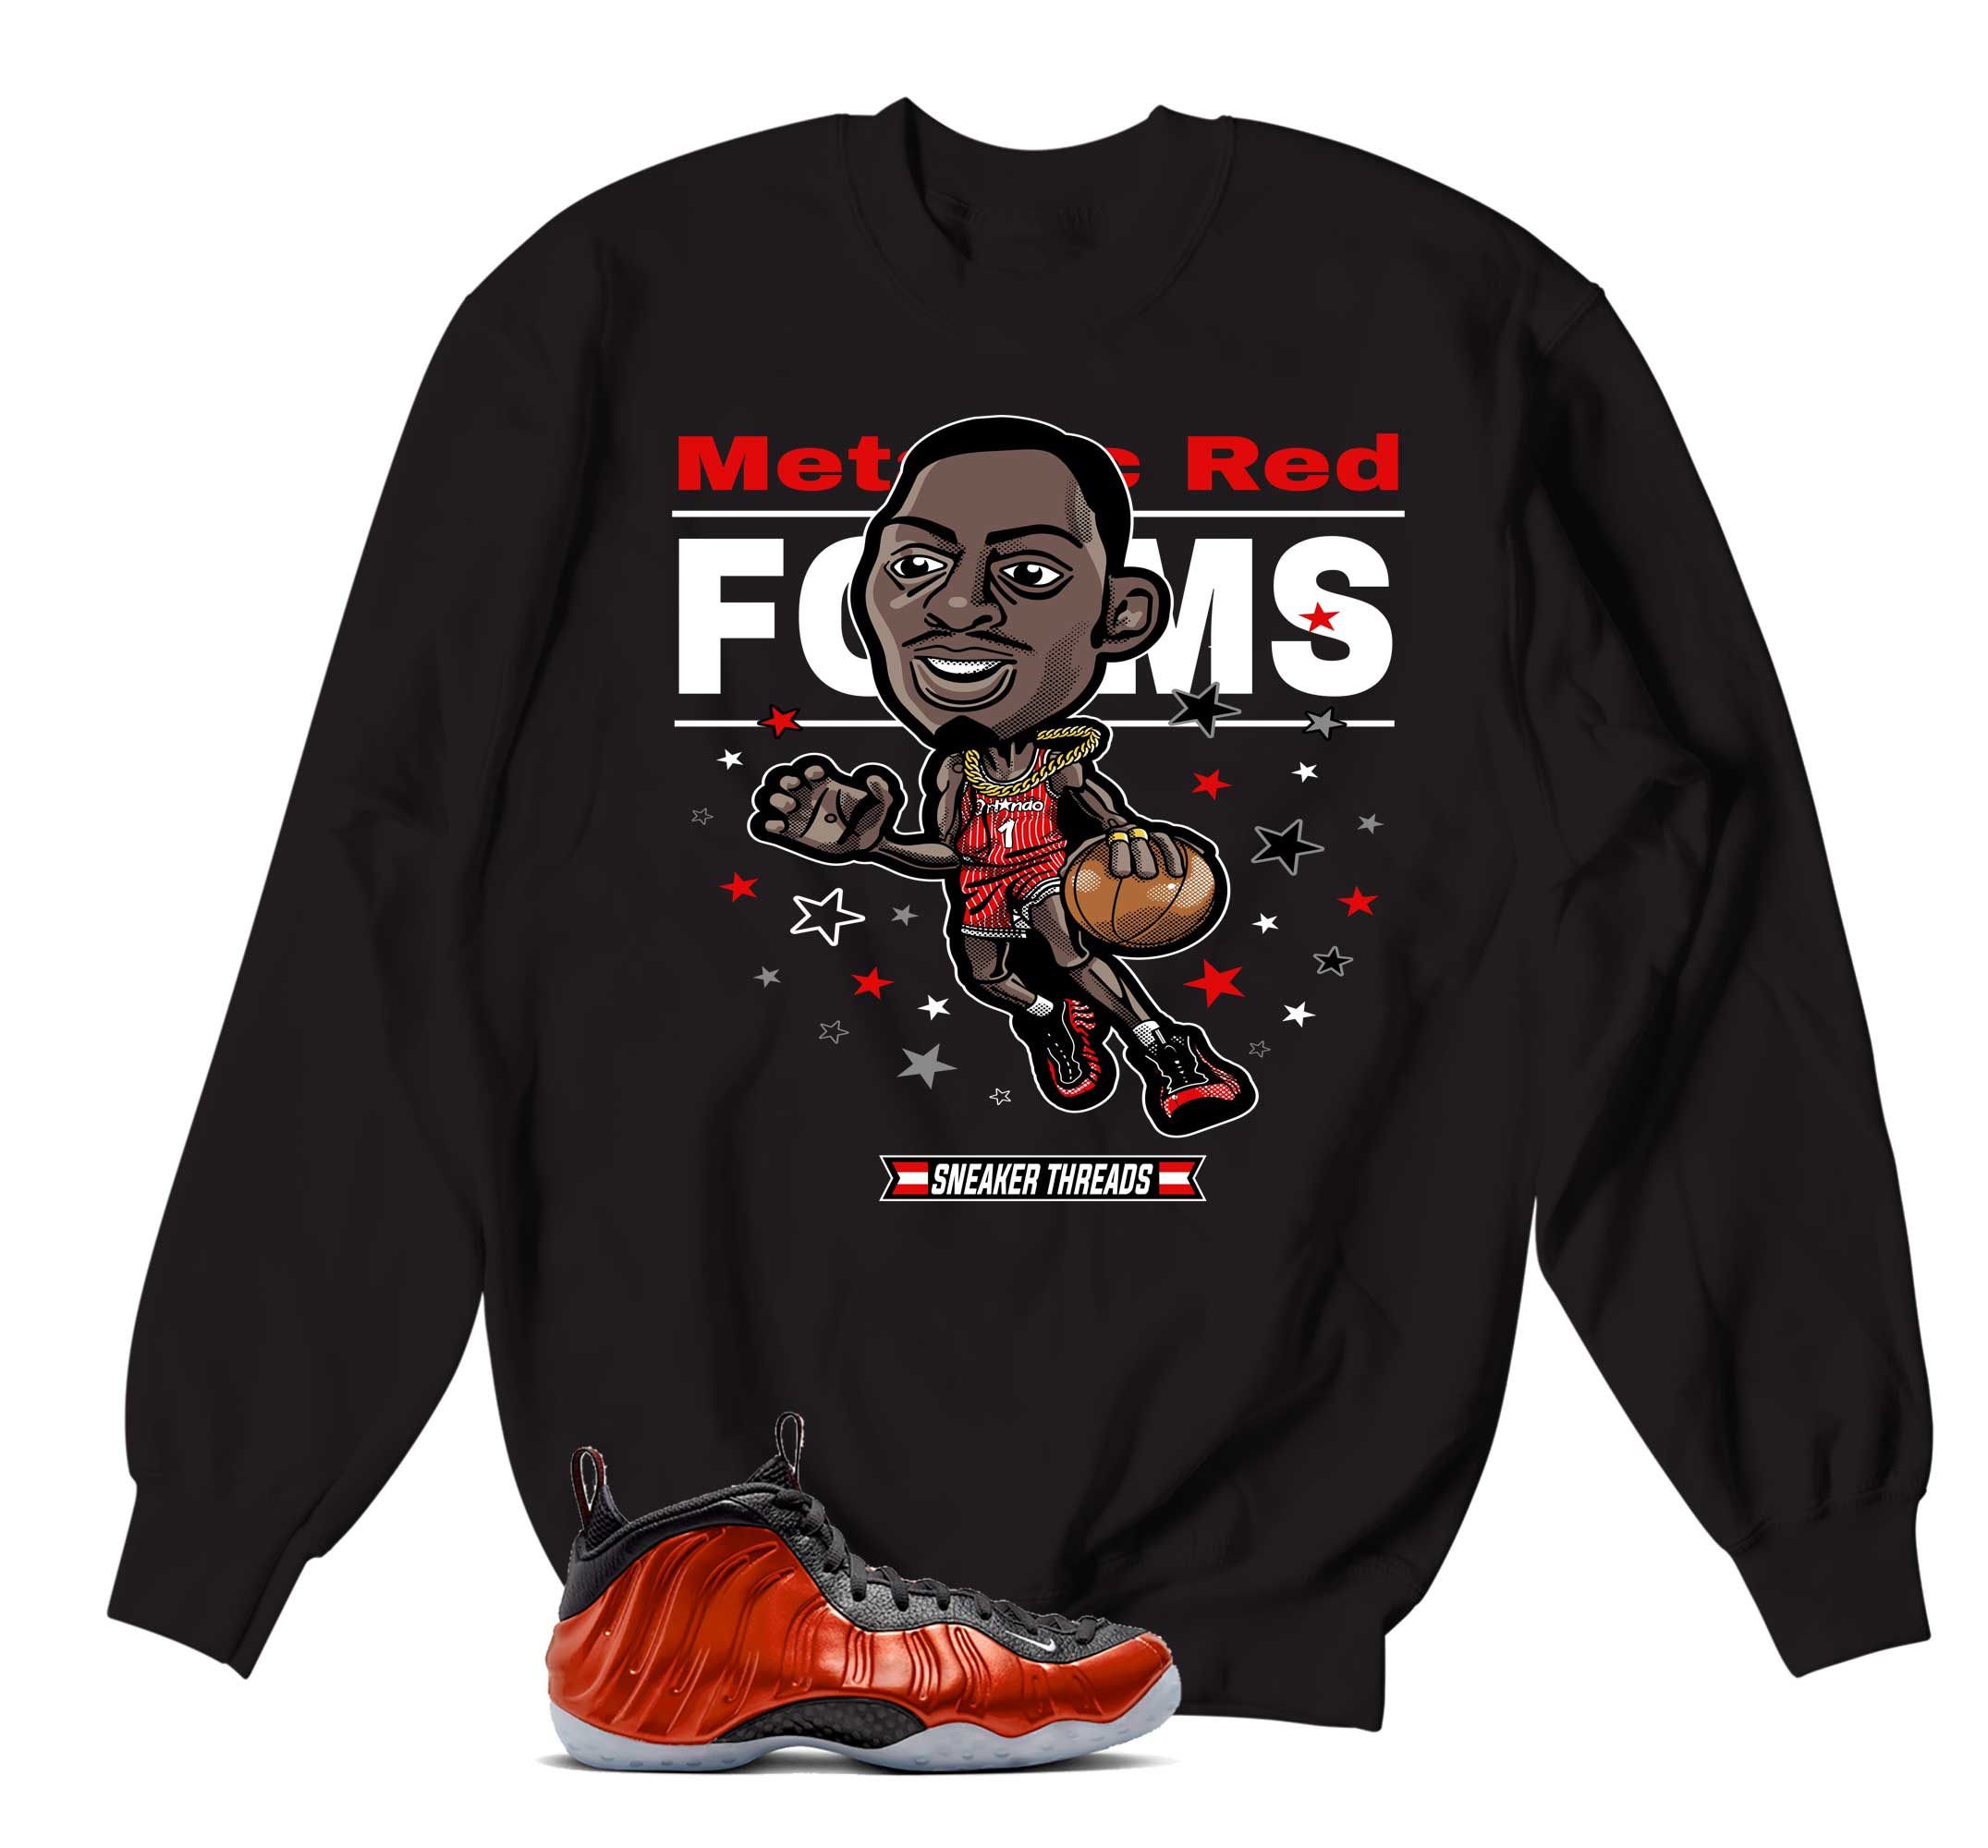 Foamposite Metallic Red Sweater - Toon - Black